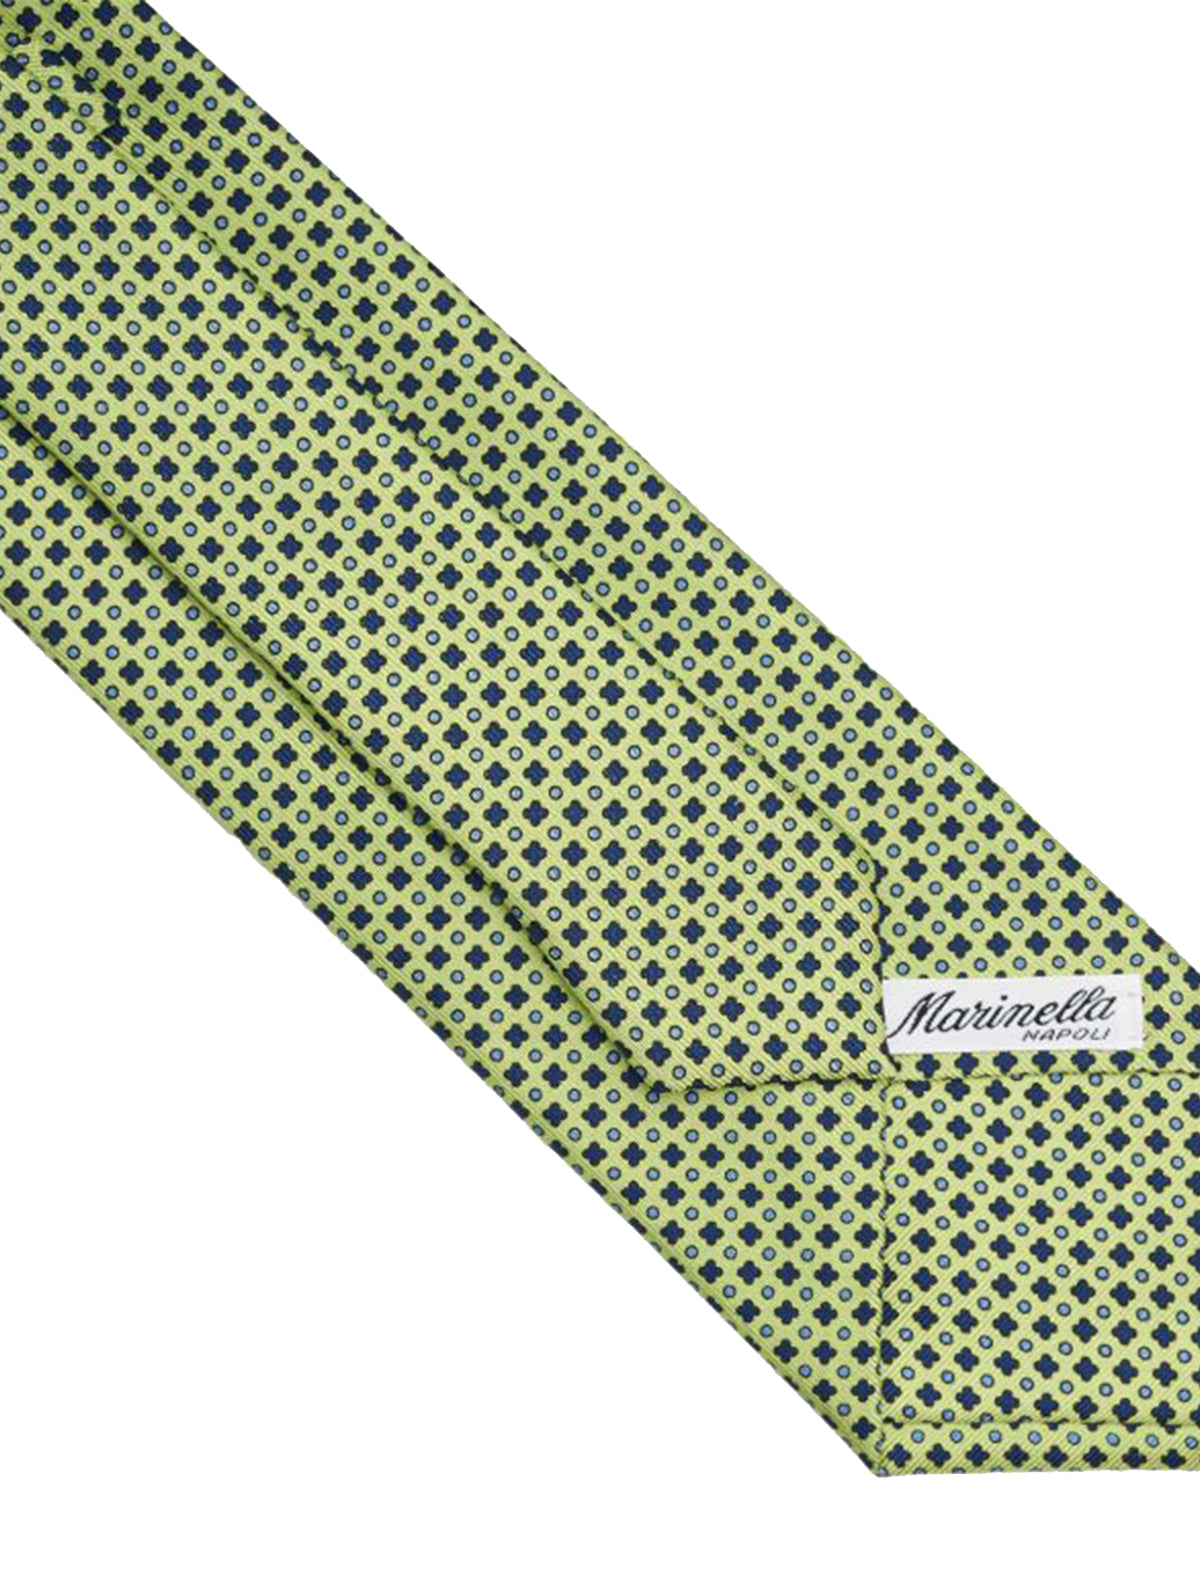 E.Marinella Hand-Printed Silk Tie in Green Floral